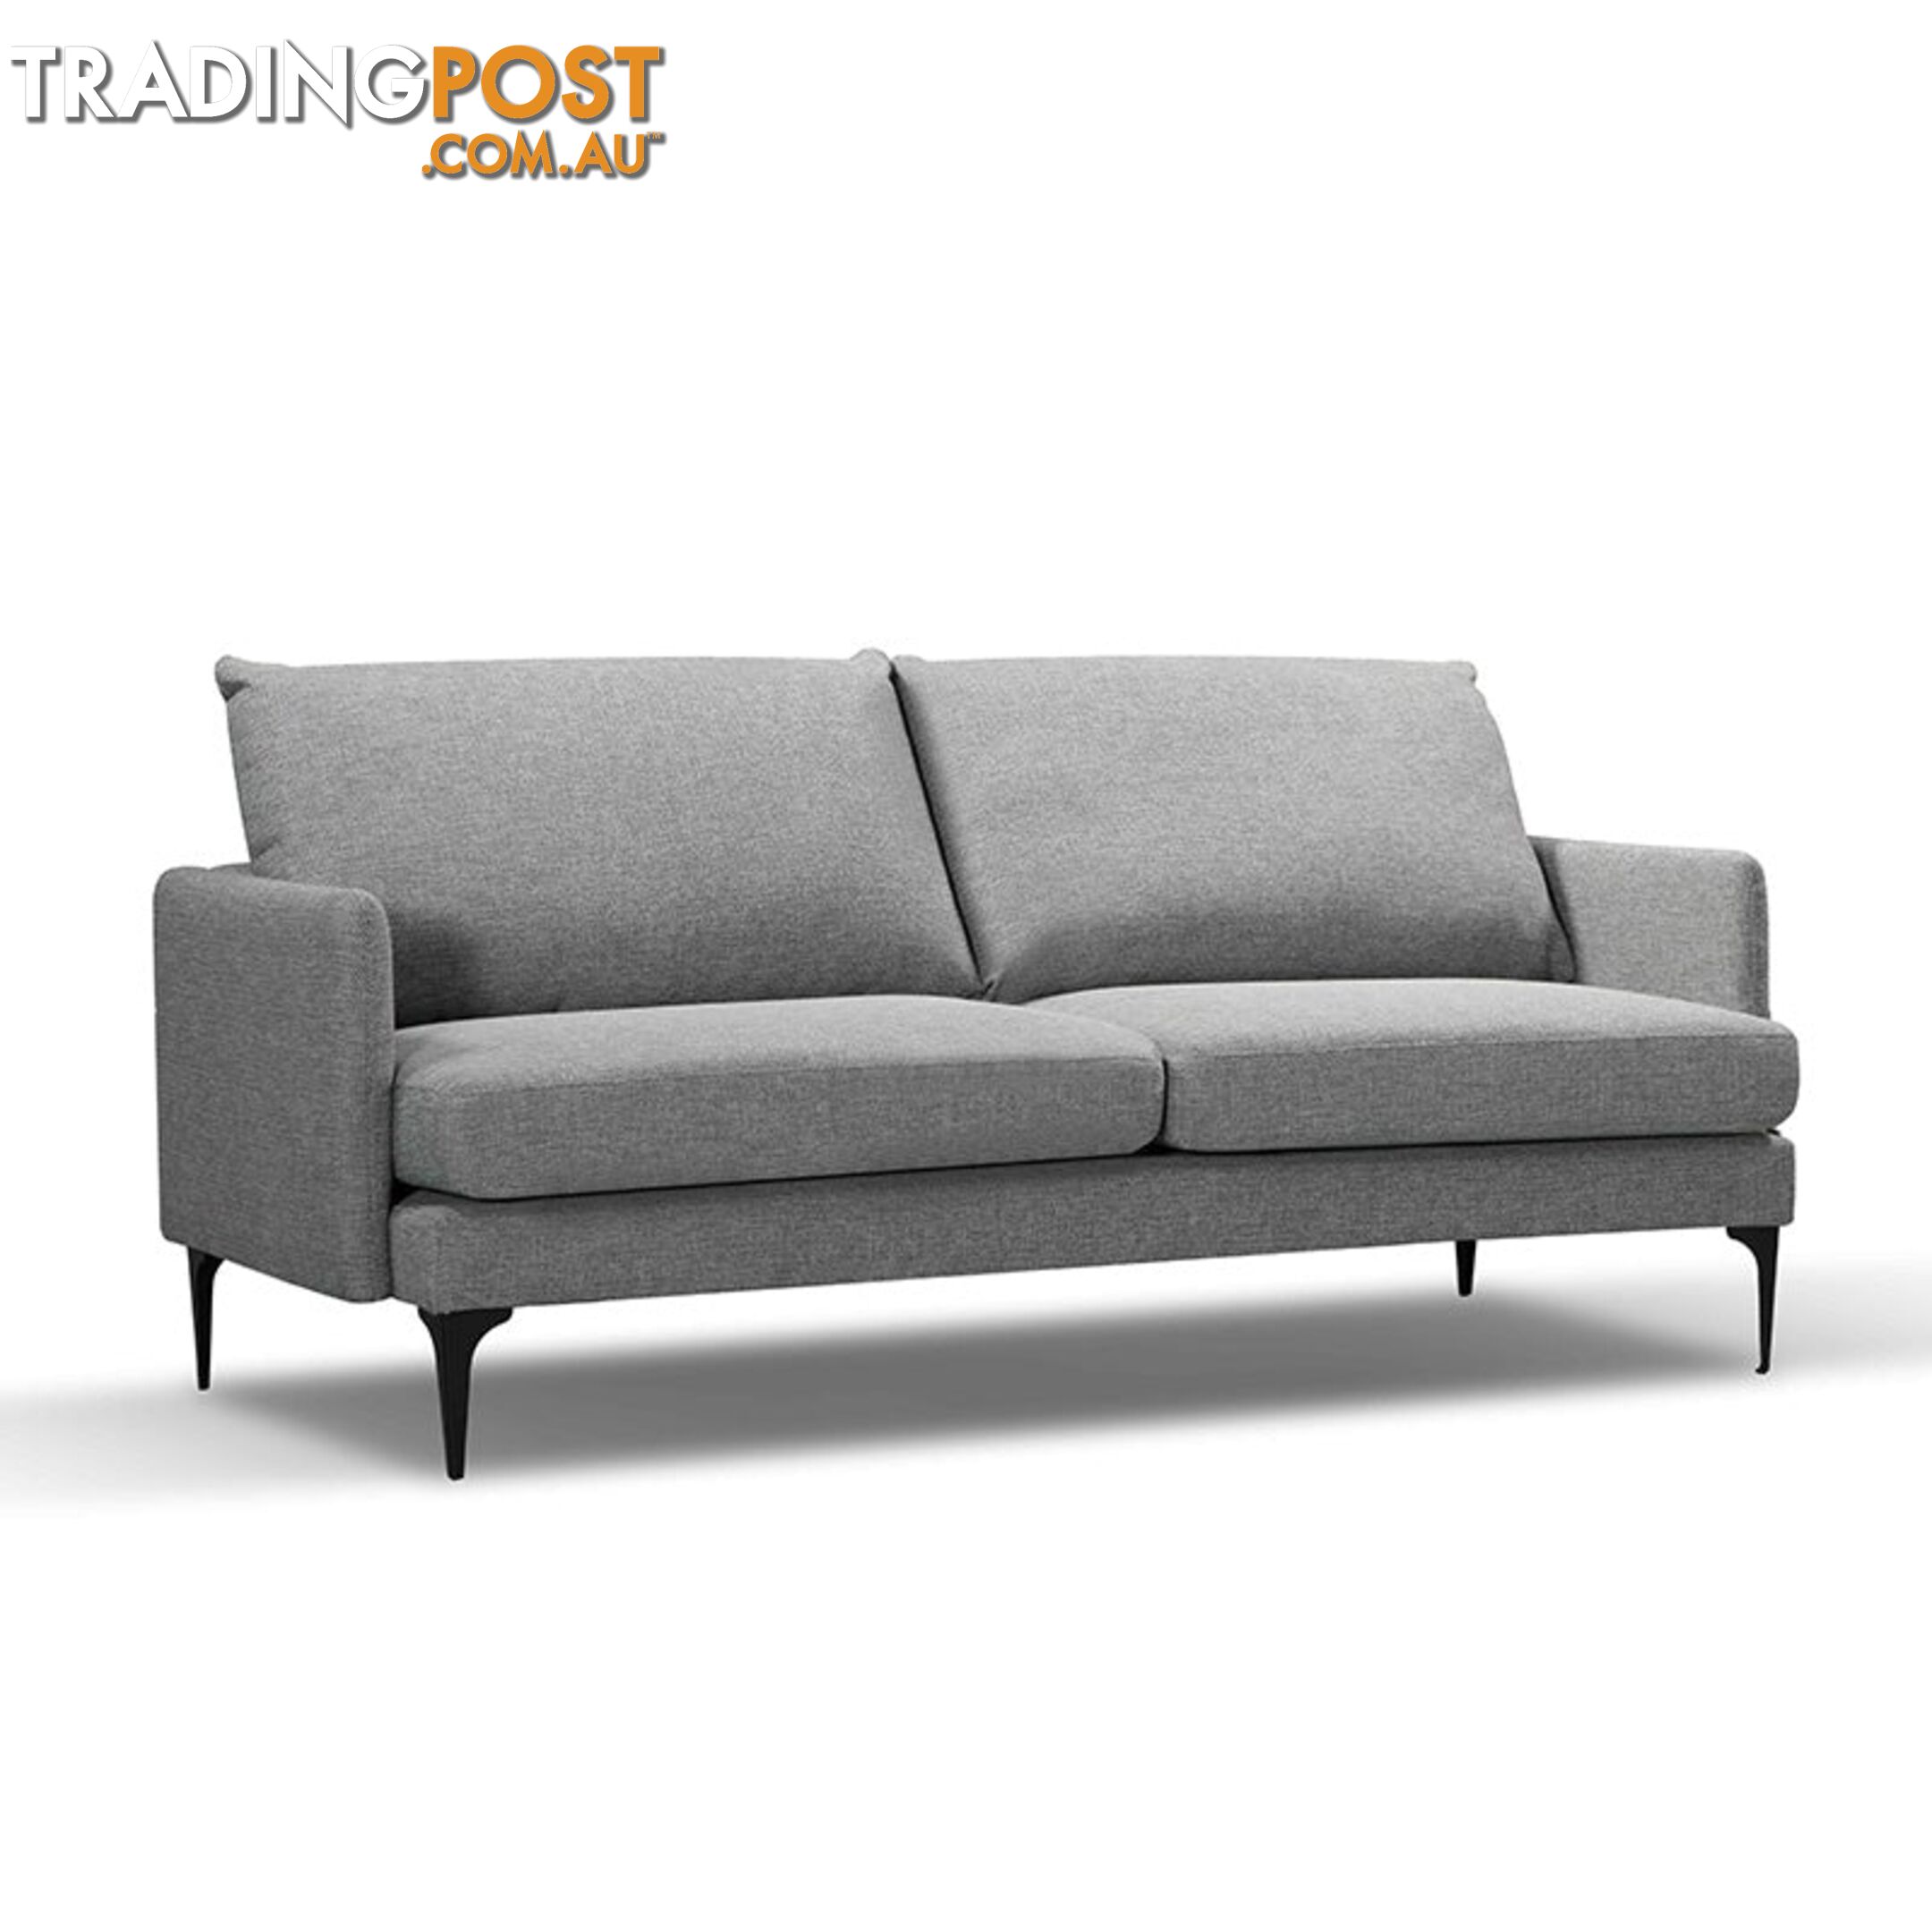 HARLOW 3 Seater Sofa - Grey - HD-2120-26 - 9334719011233